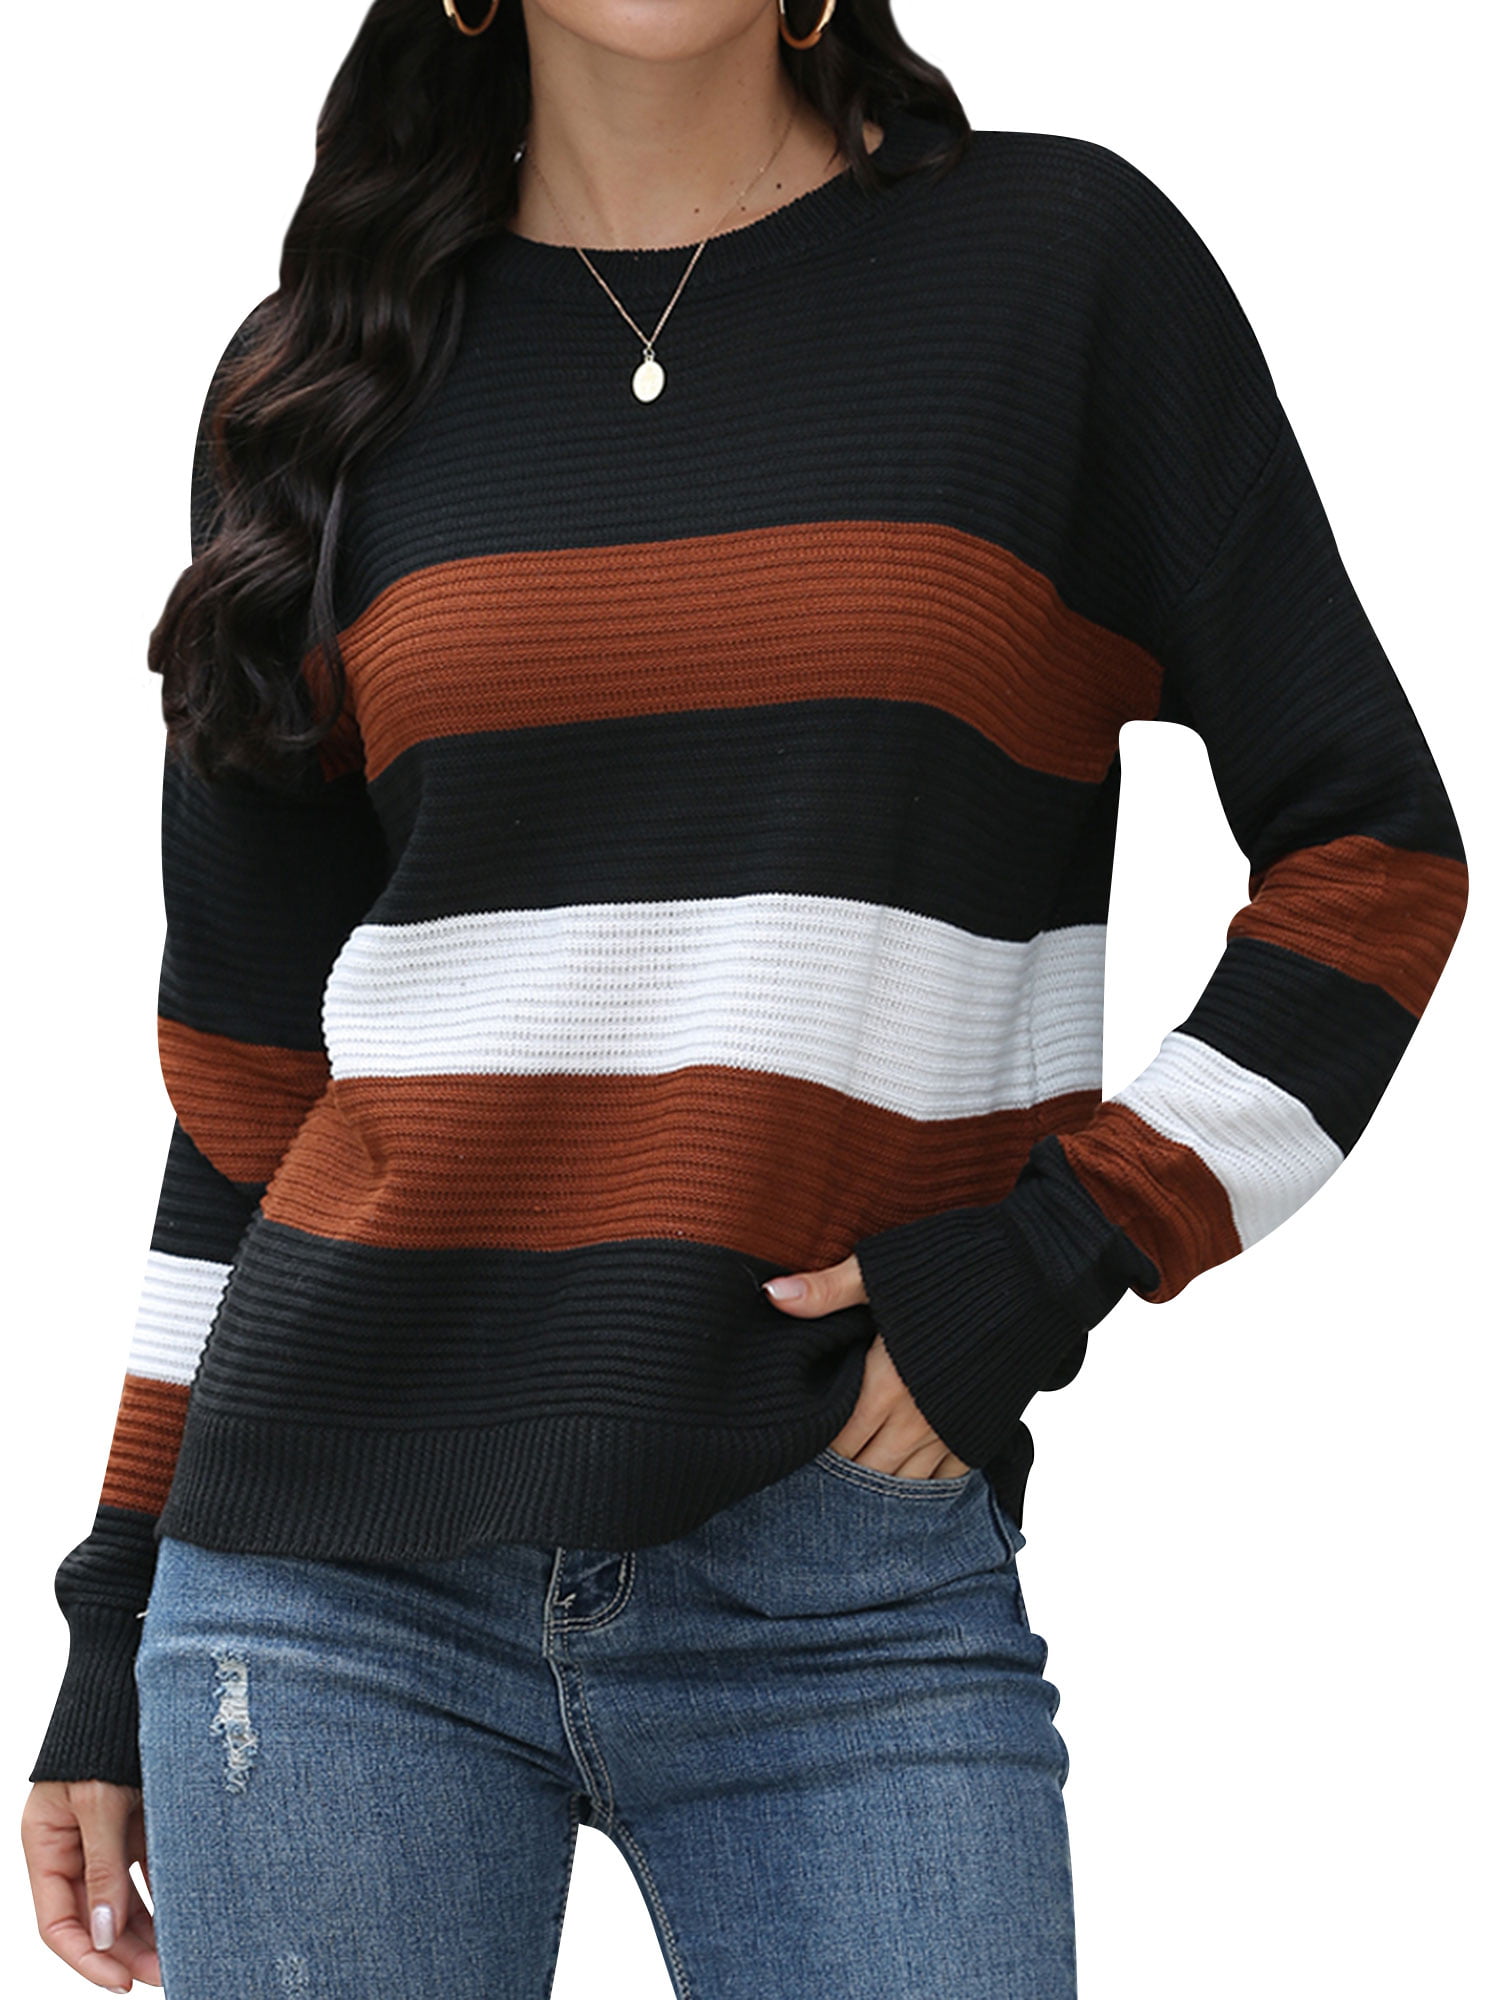 HUBERY - HUBERY Women Colorblock Stripe Crew Neck Long Sleeve Sweater ...